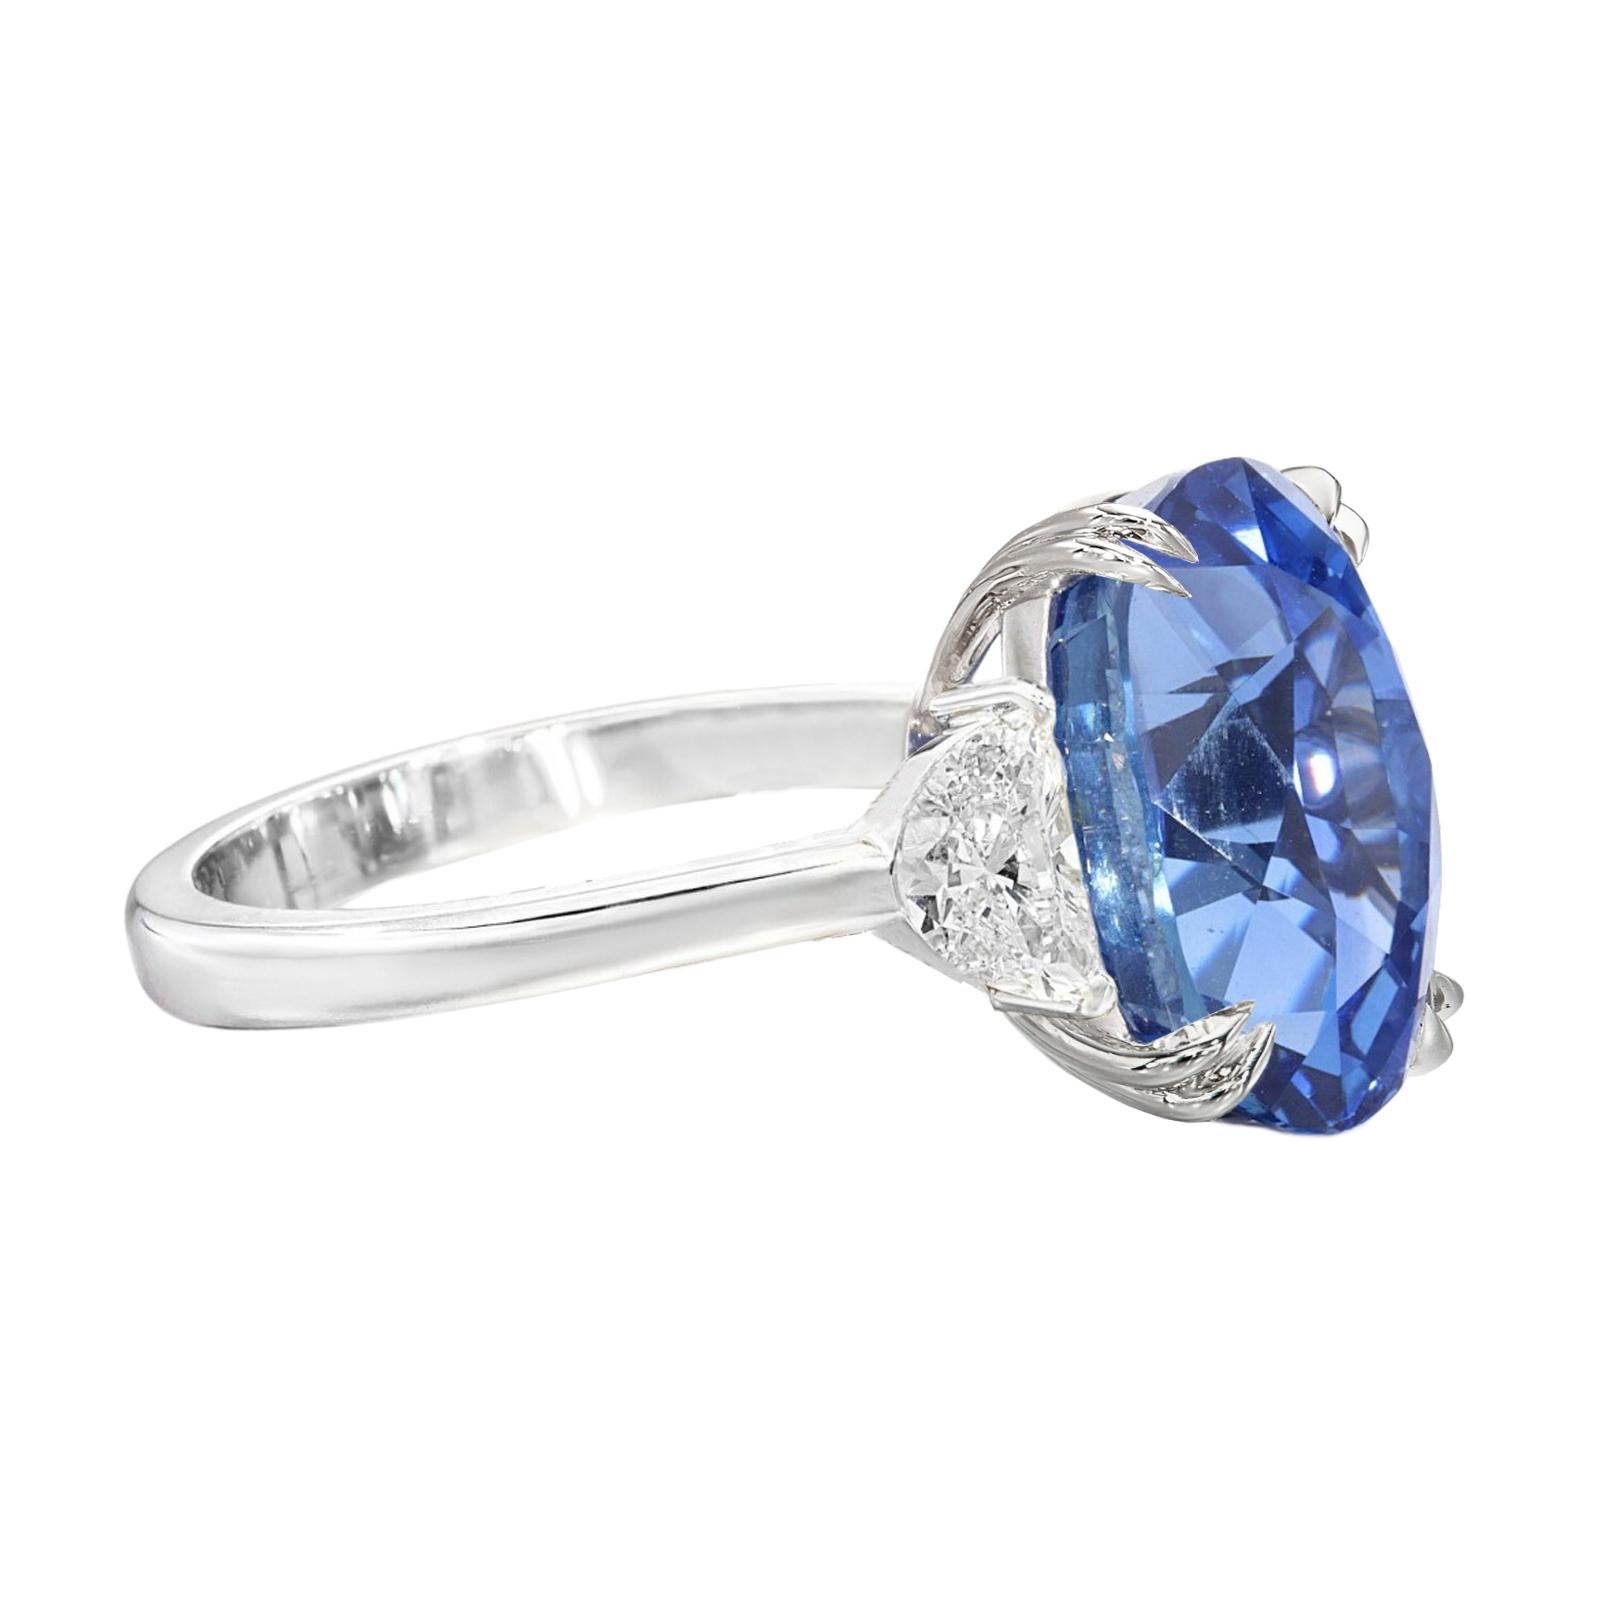 Oval Cut GIA Certified 10.9 Carat KASHMIR ORIGIN NO HEAT Oval Blue Sapphire Ring For Sale